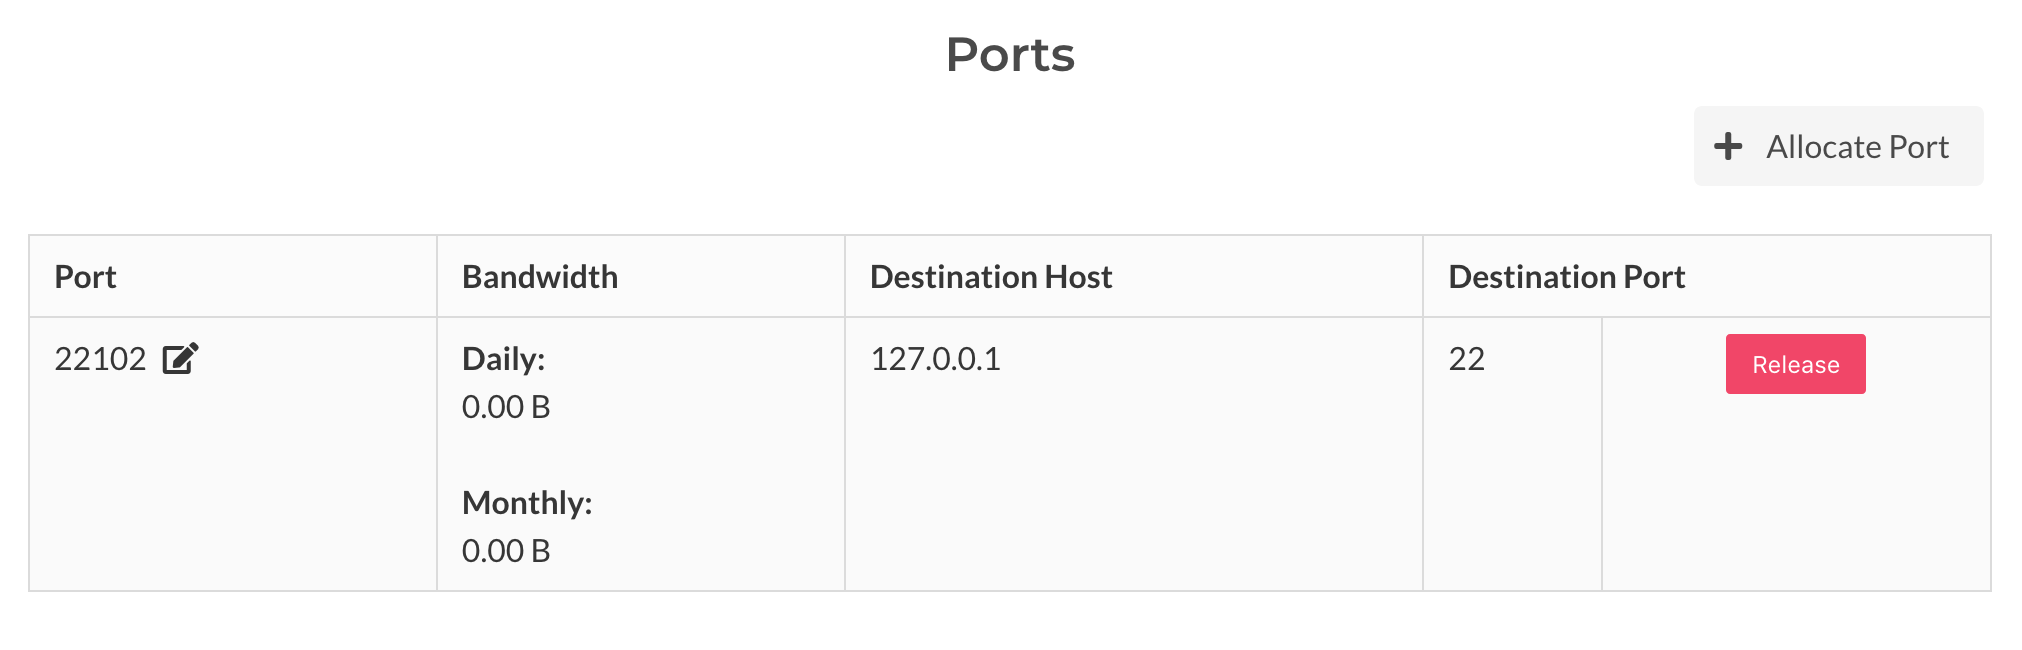 Release Port